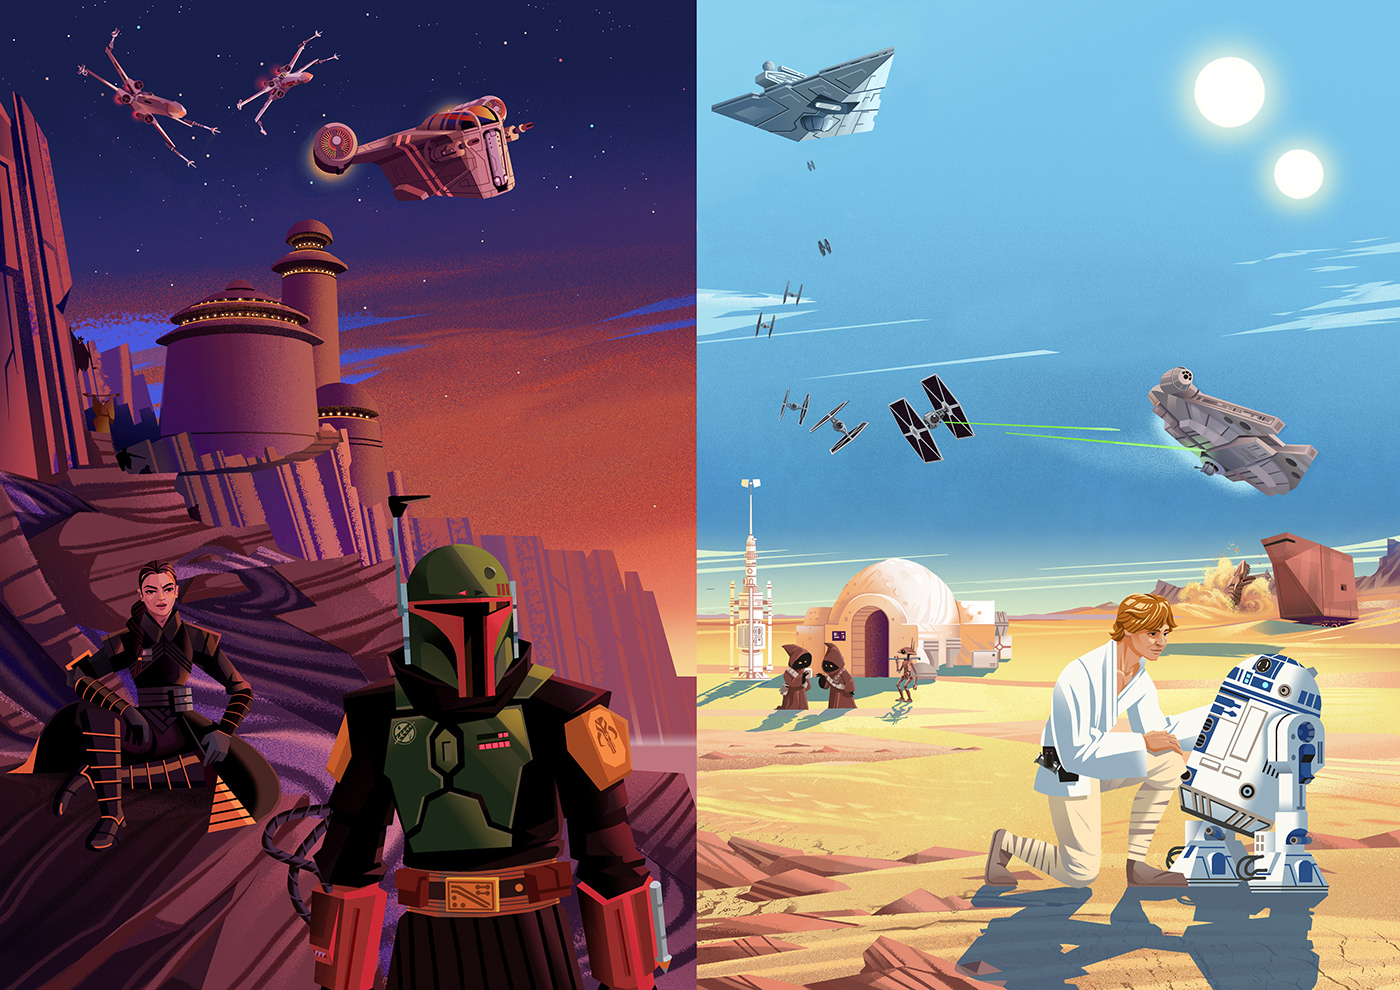 Star Wars example #11: Star Wars: Exploring Tatooine